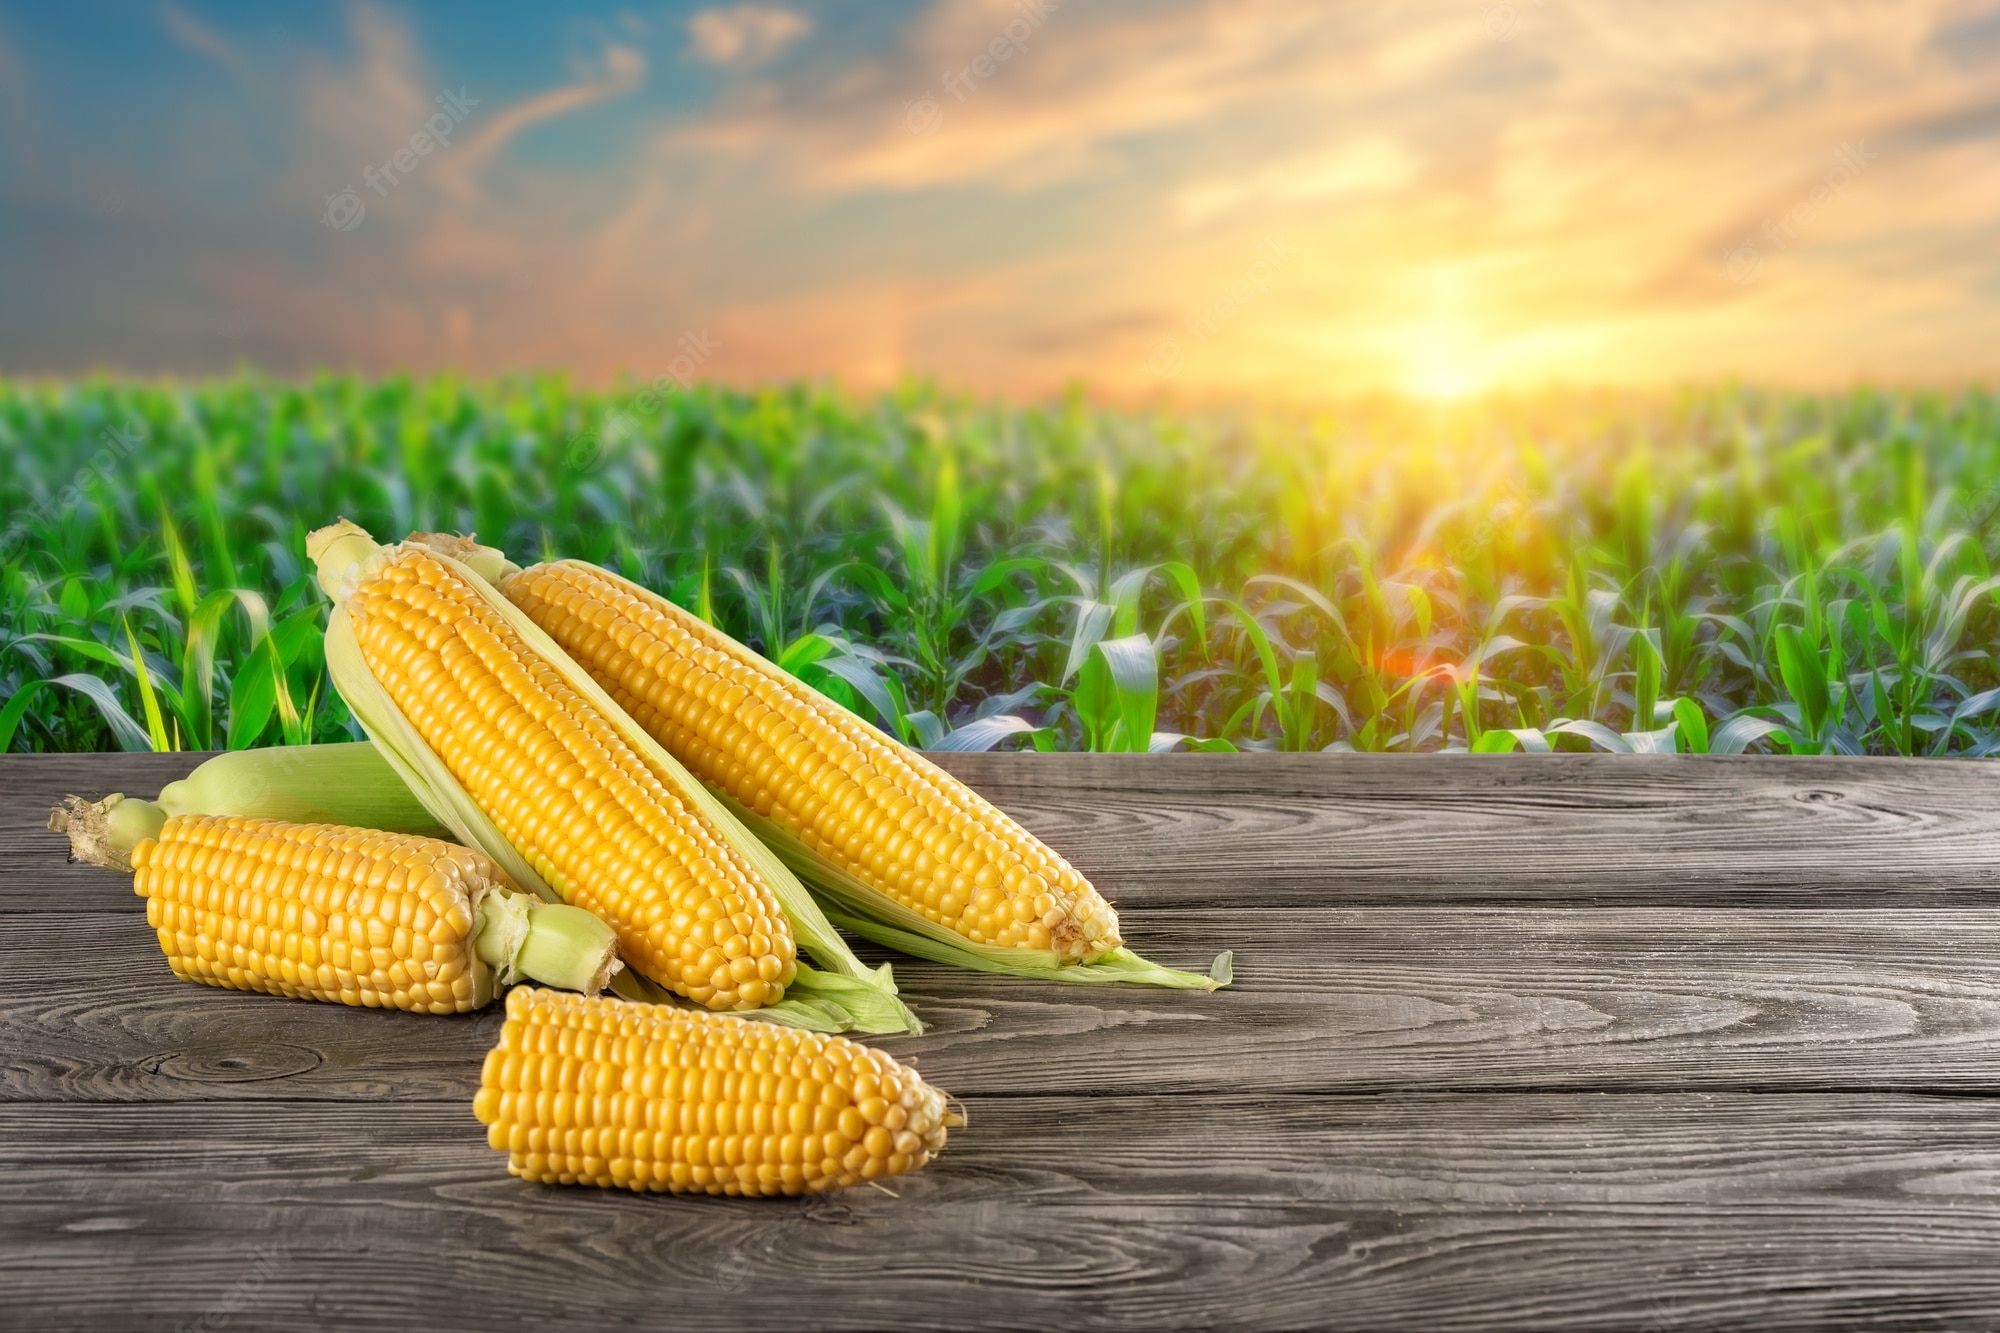 Corn Field Background